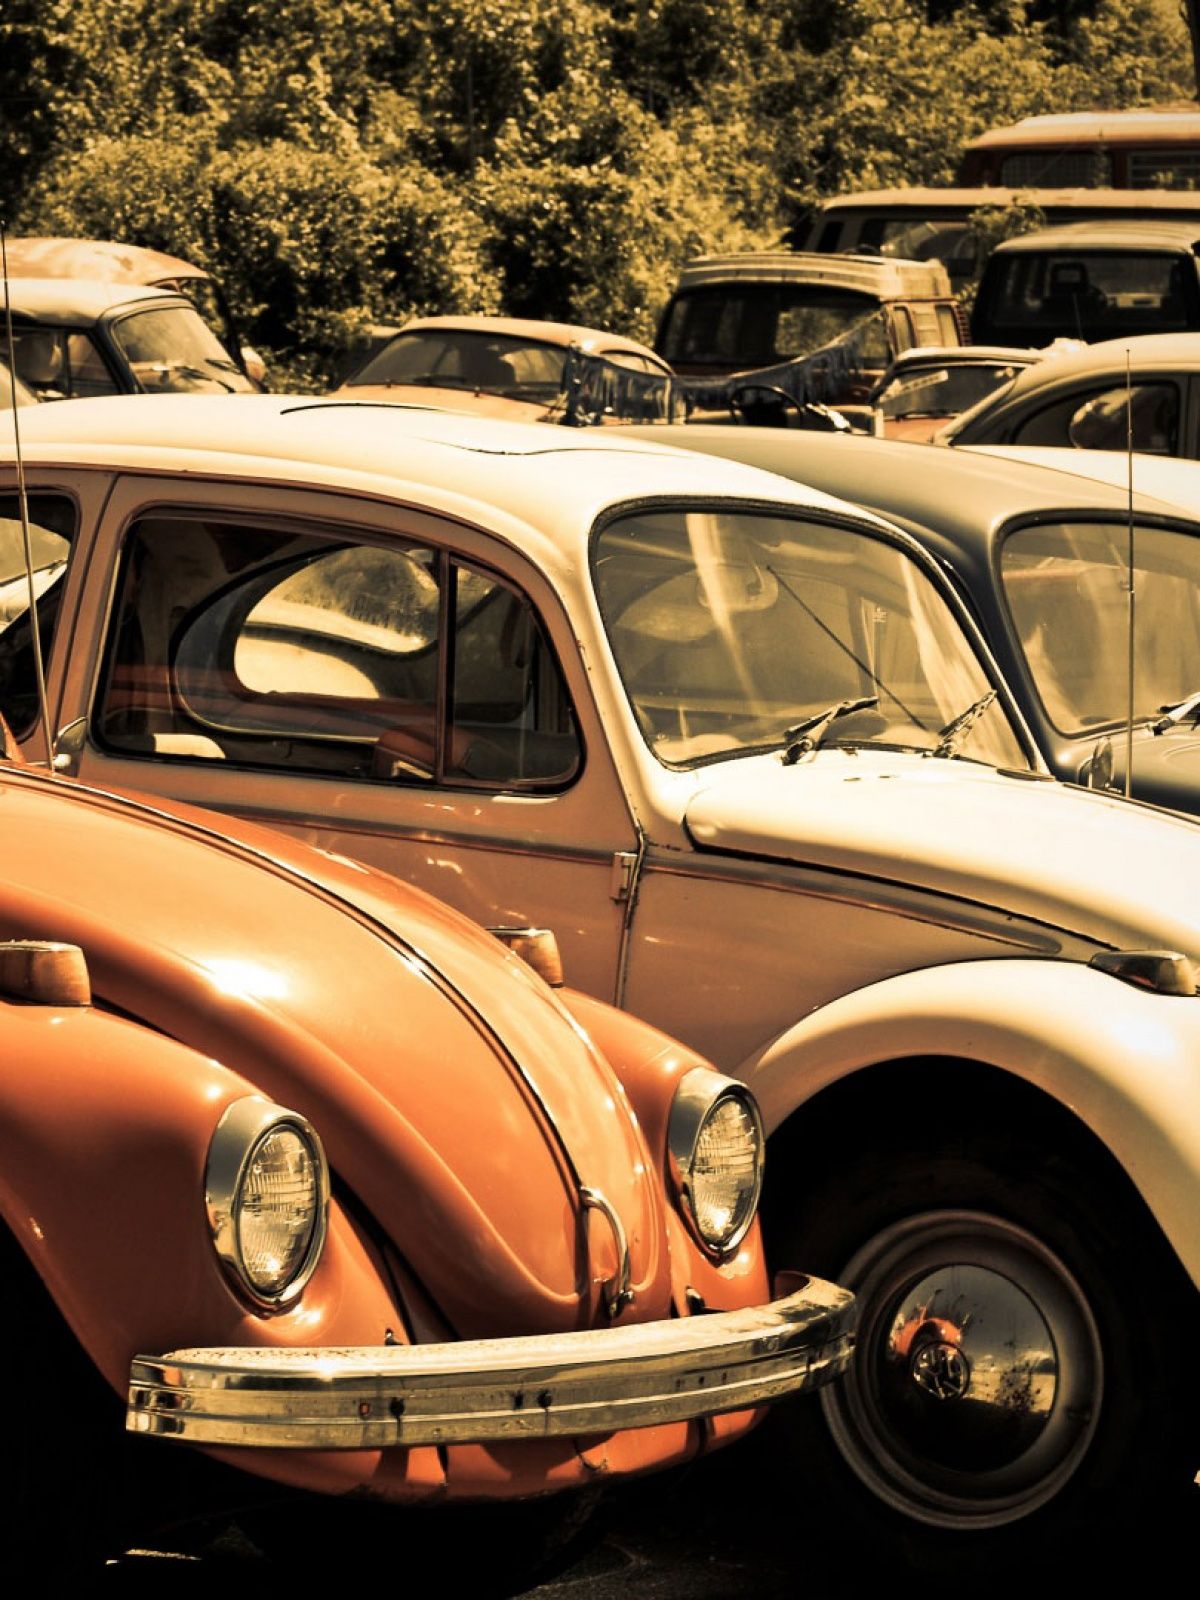 Old Volkswagen Beetle Junkyard Mobile Wallpaper